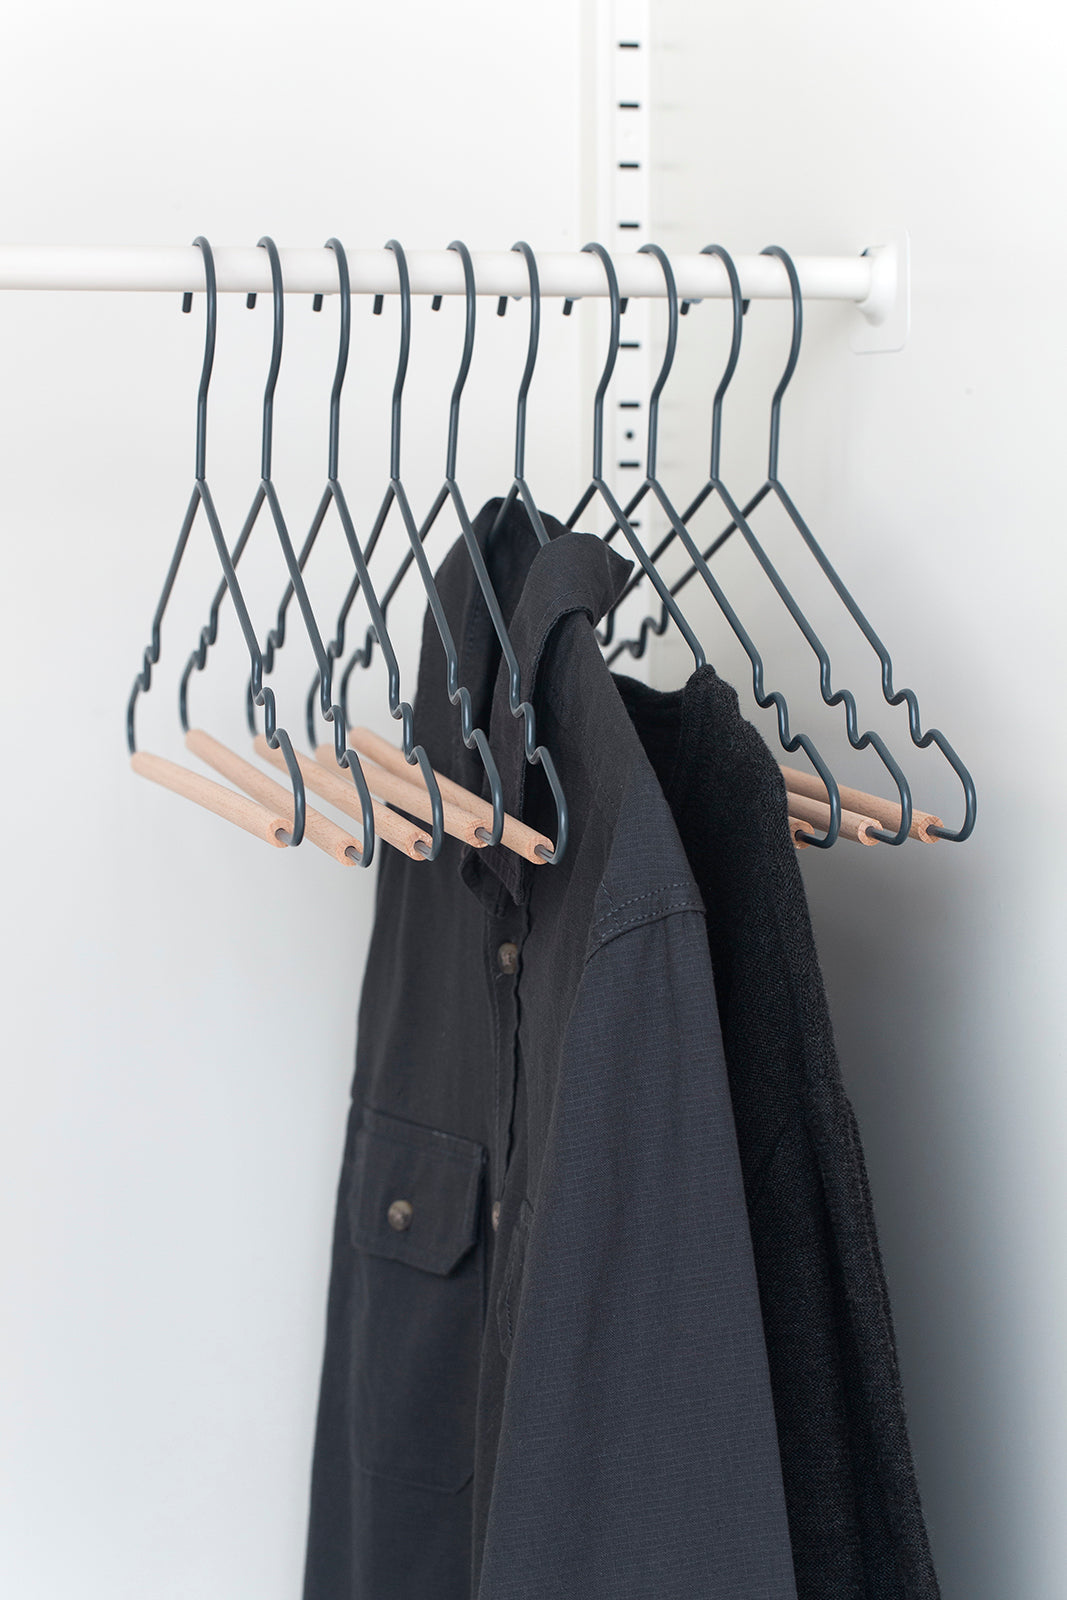 darlene maestas recommends mature hangers tumblr pic